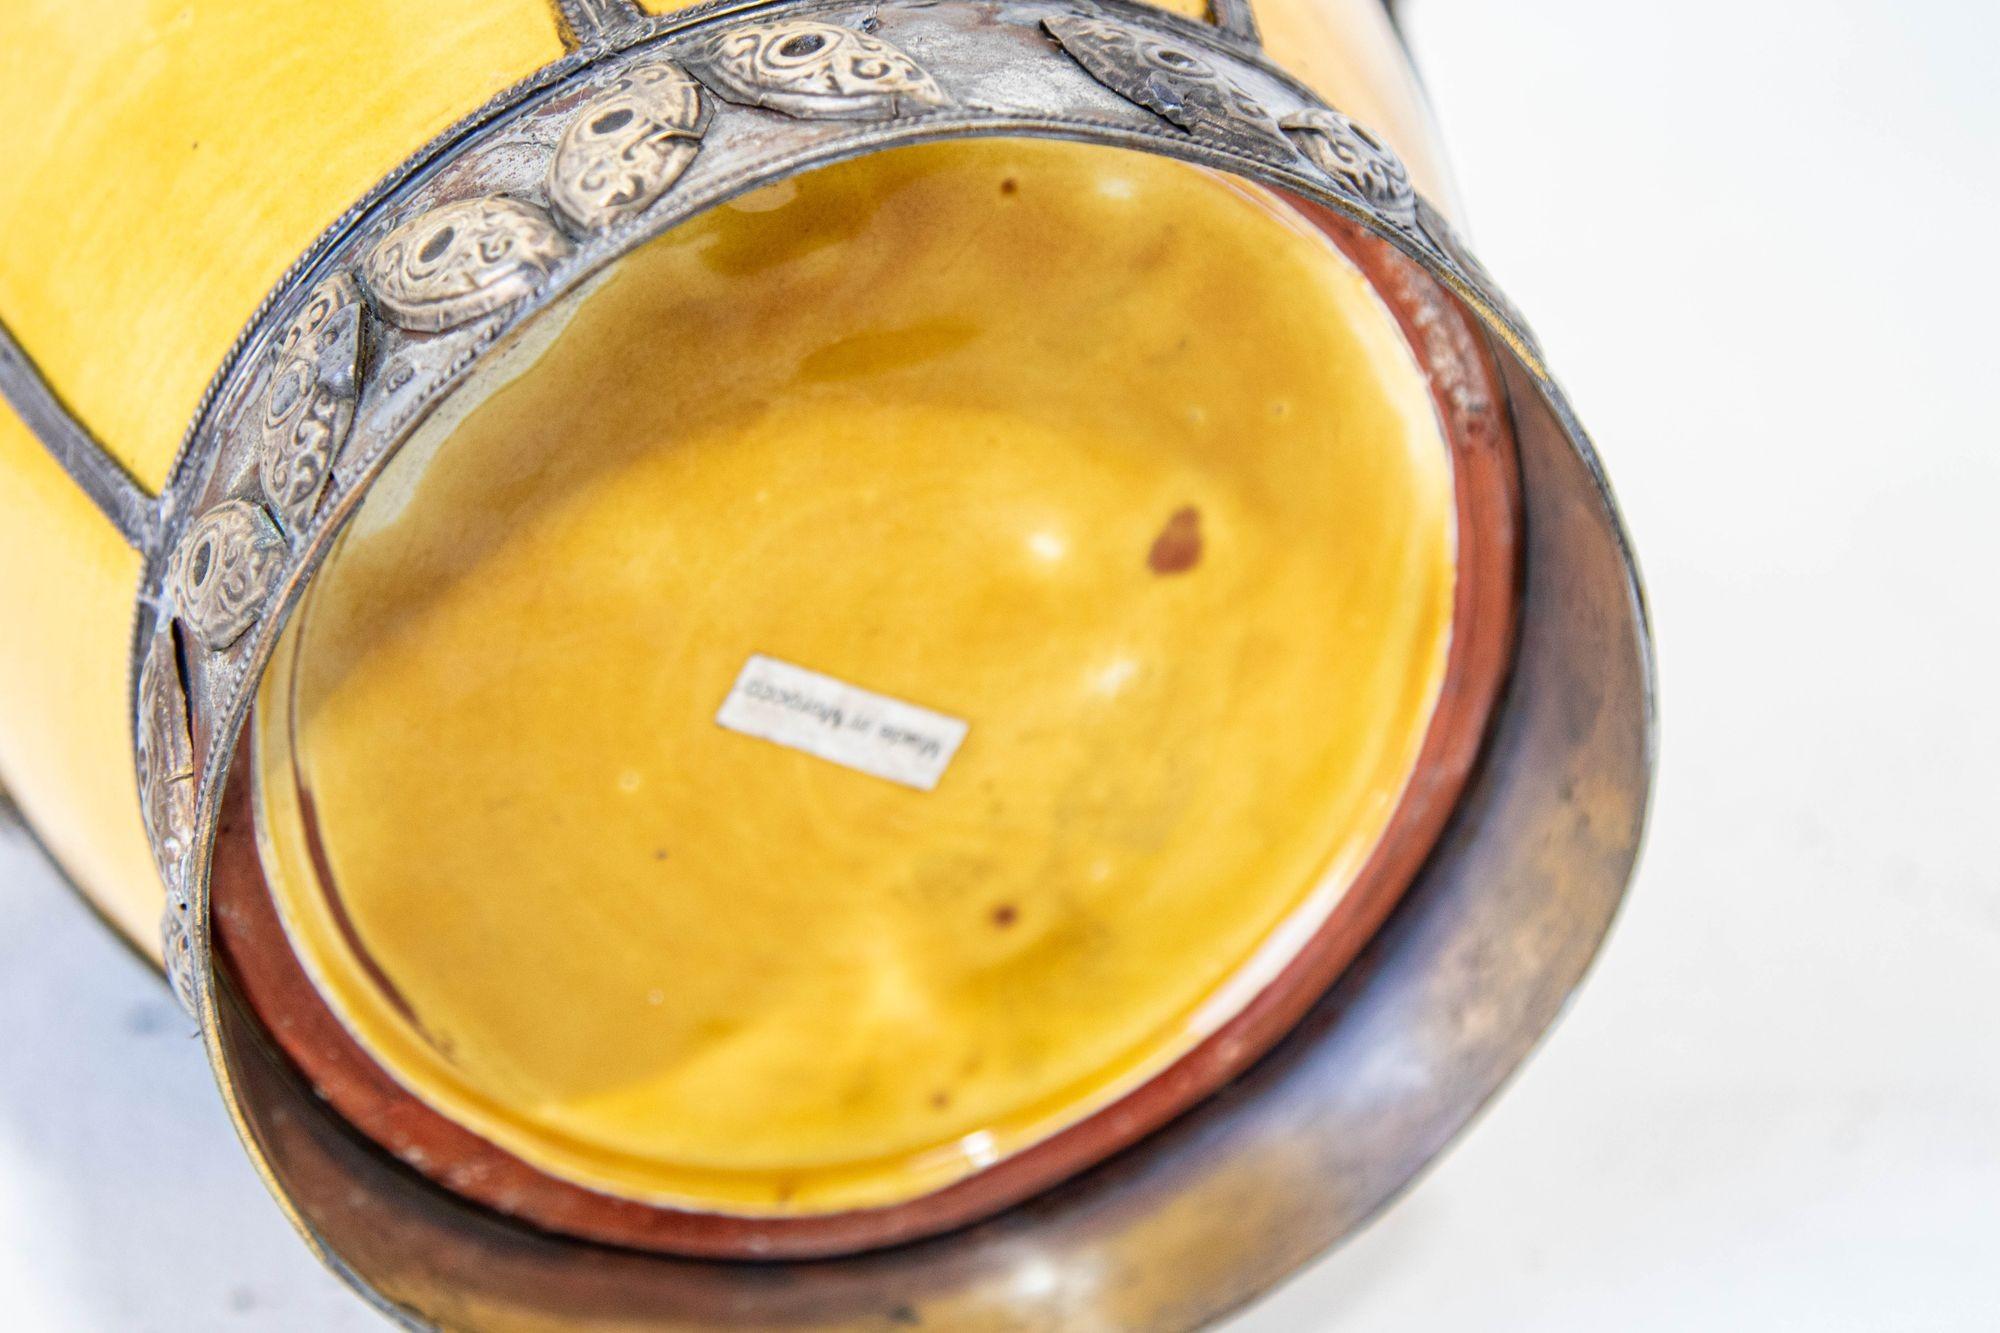 Antique Moroccan Ceramic Vase Bright Yellow with Metal Moorish Filigree overlaid For Sale 5